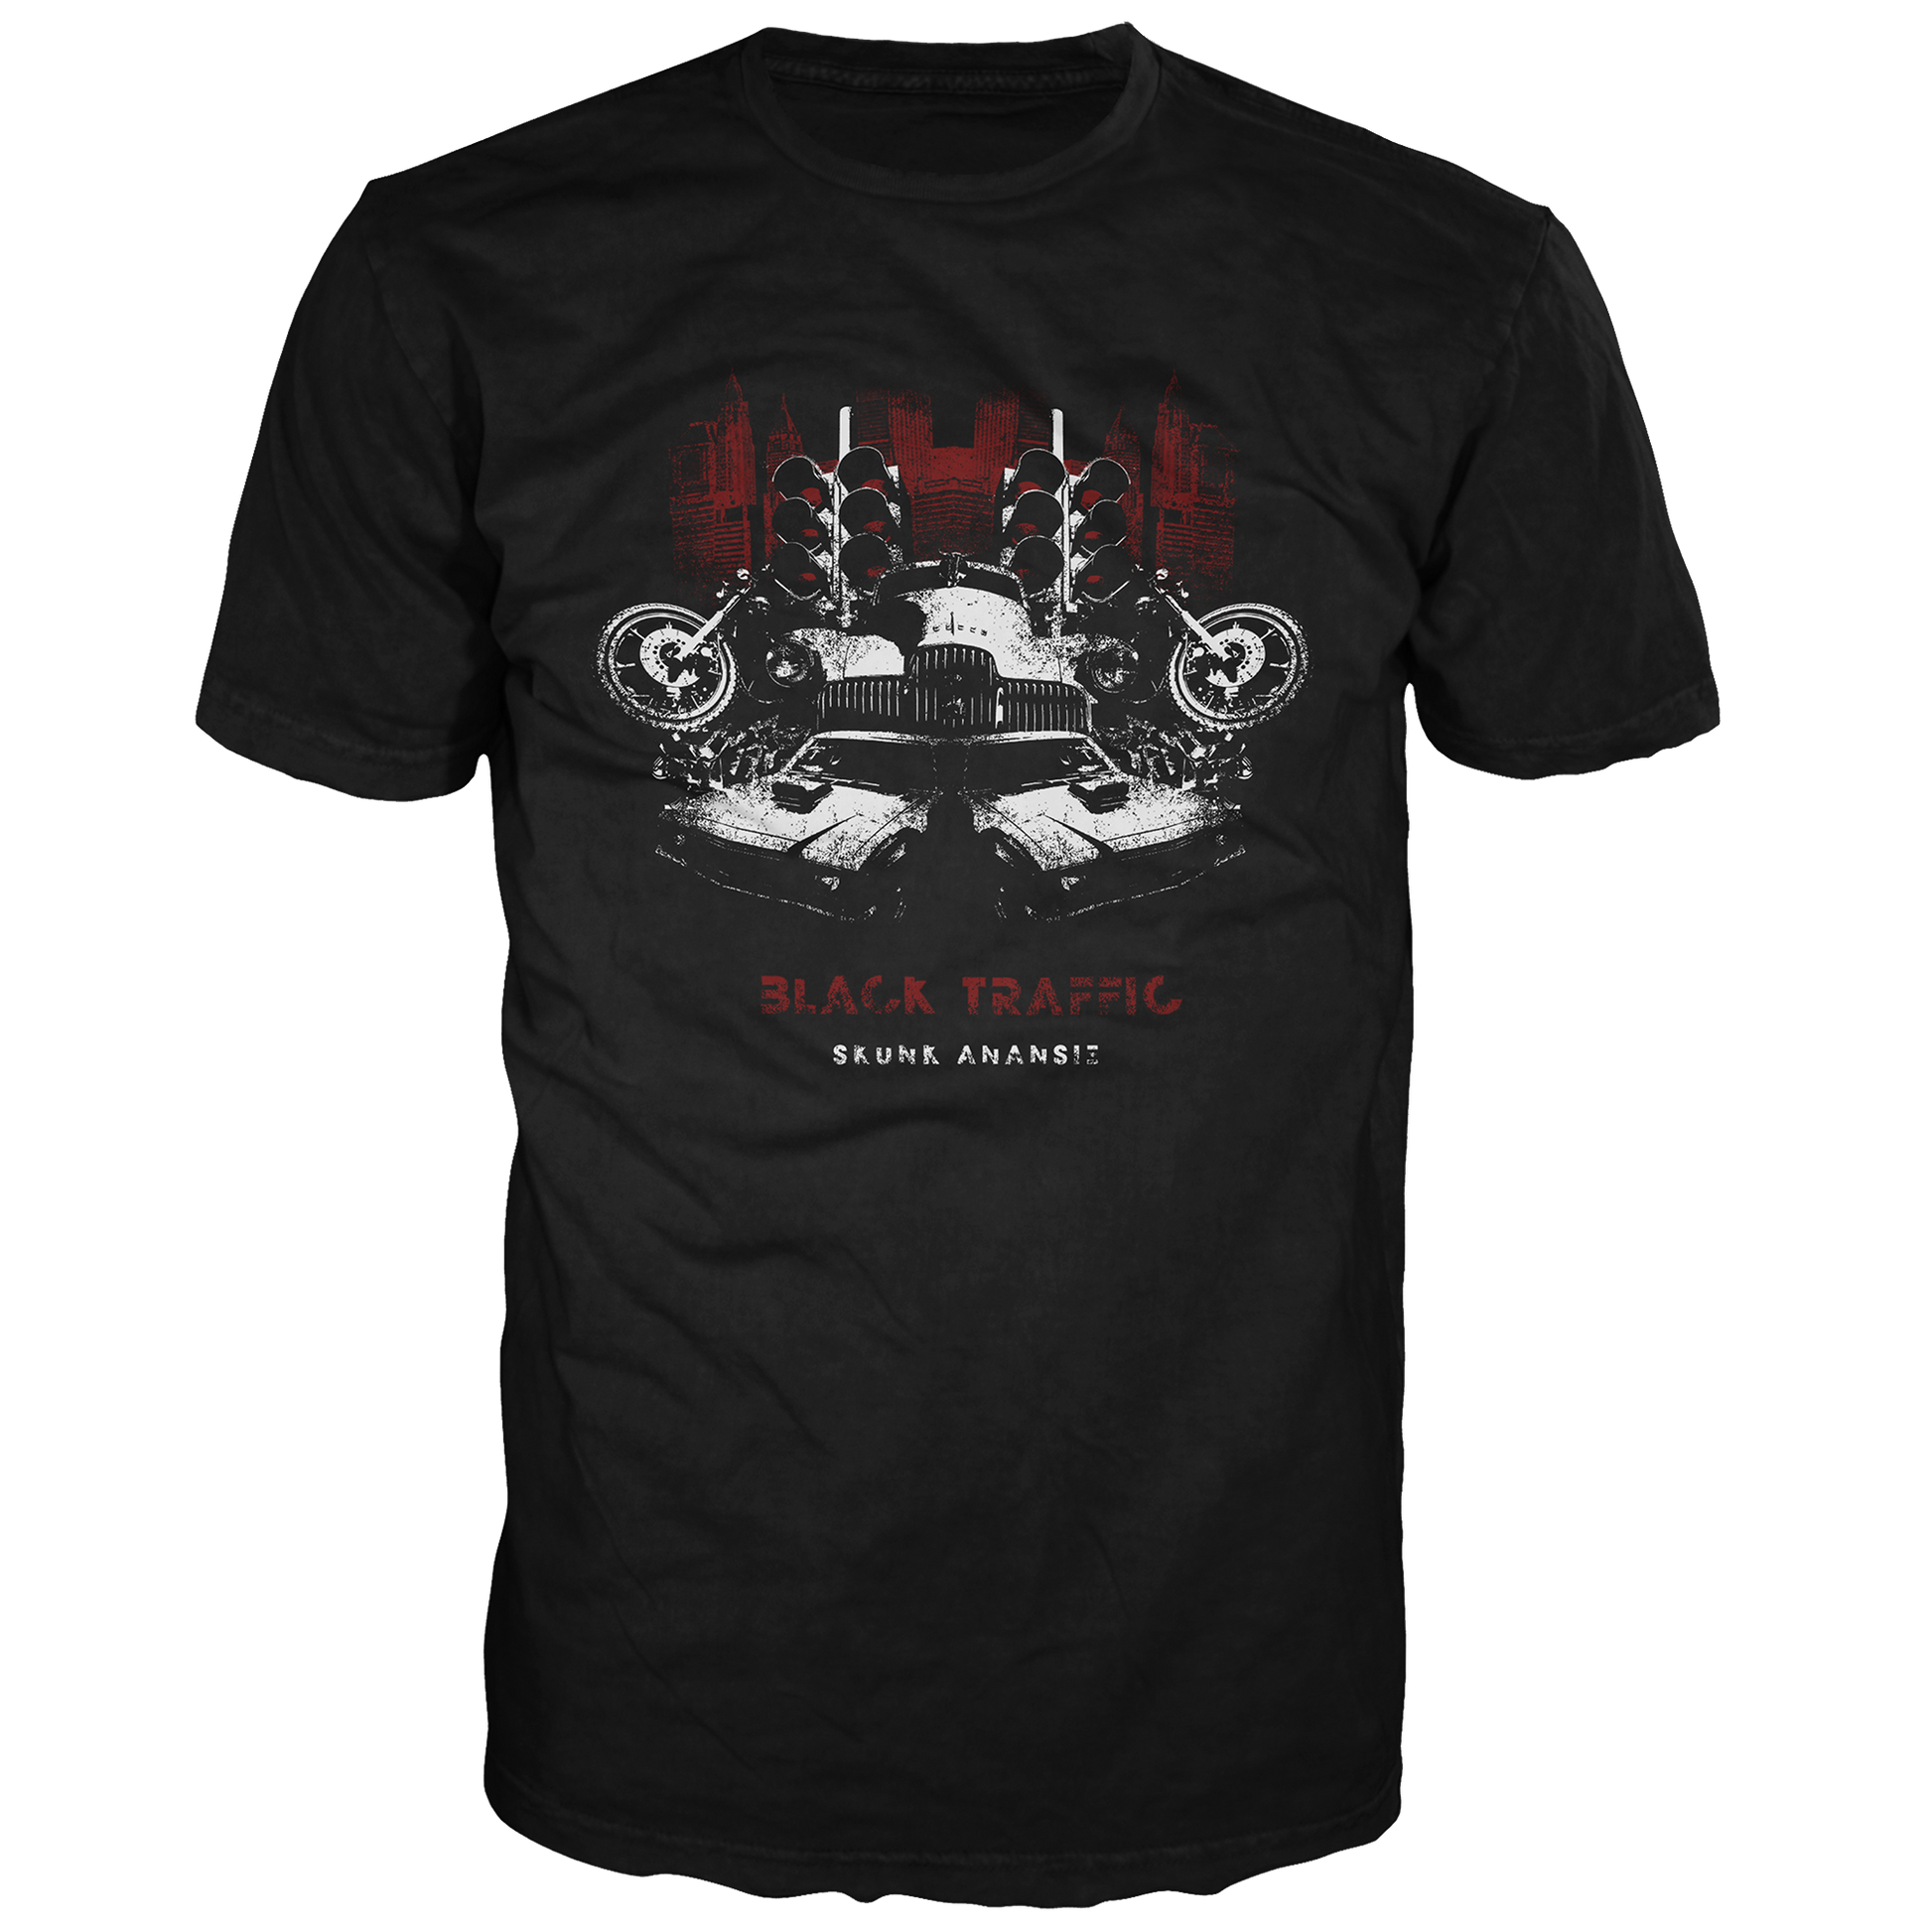 Black Traffic - T-shirt | Skunk Anansie Official Store